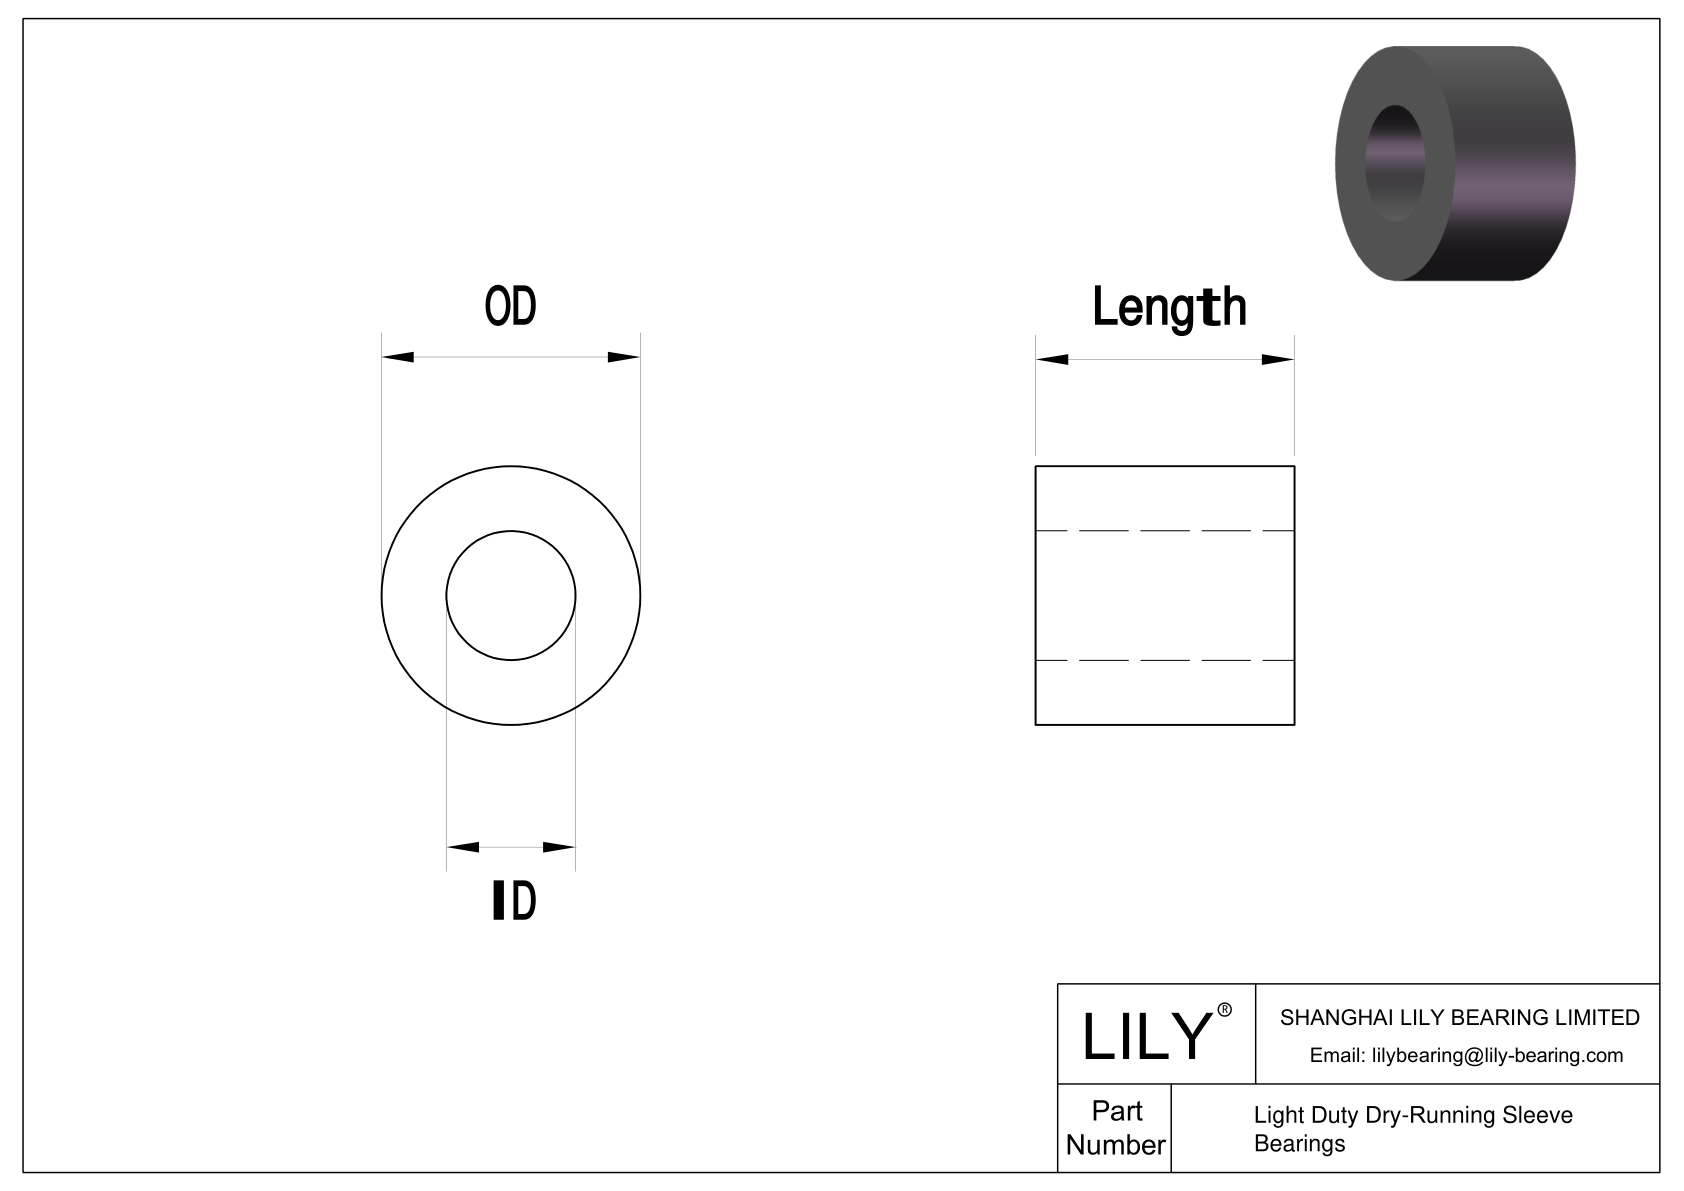 6389K725 Light Duty Dry-Running Sleeve Bearings cad drawing